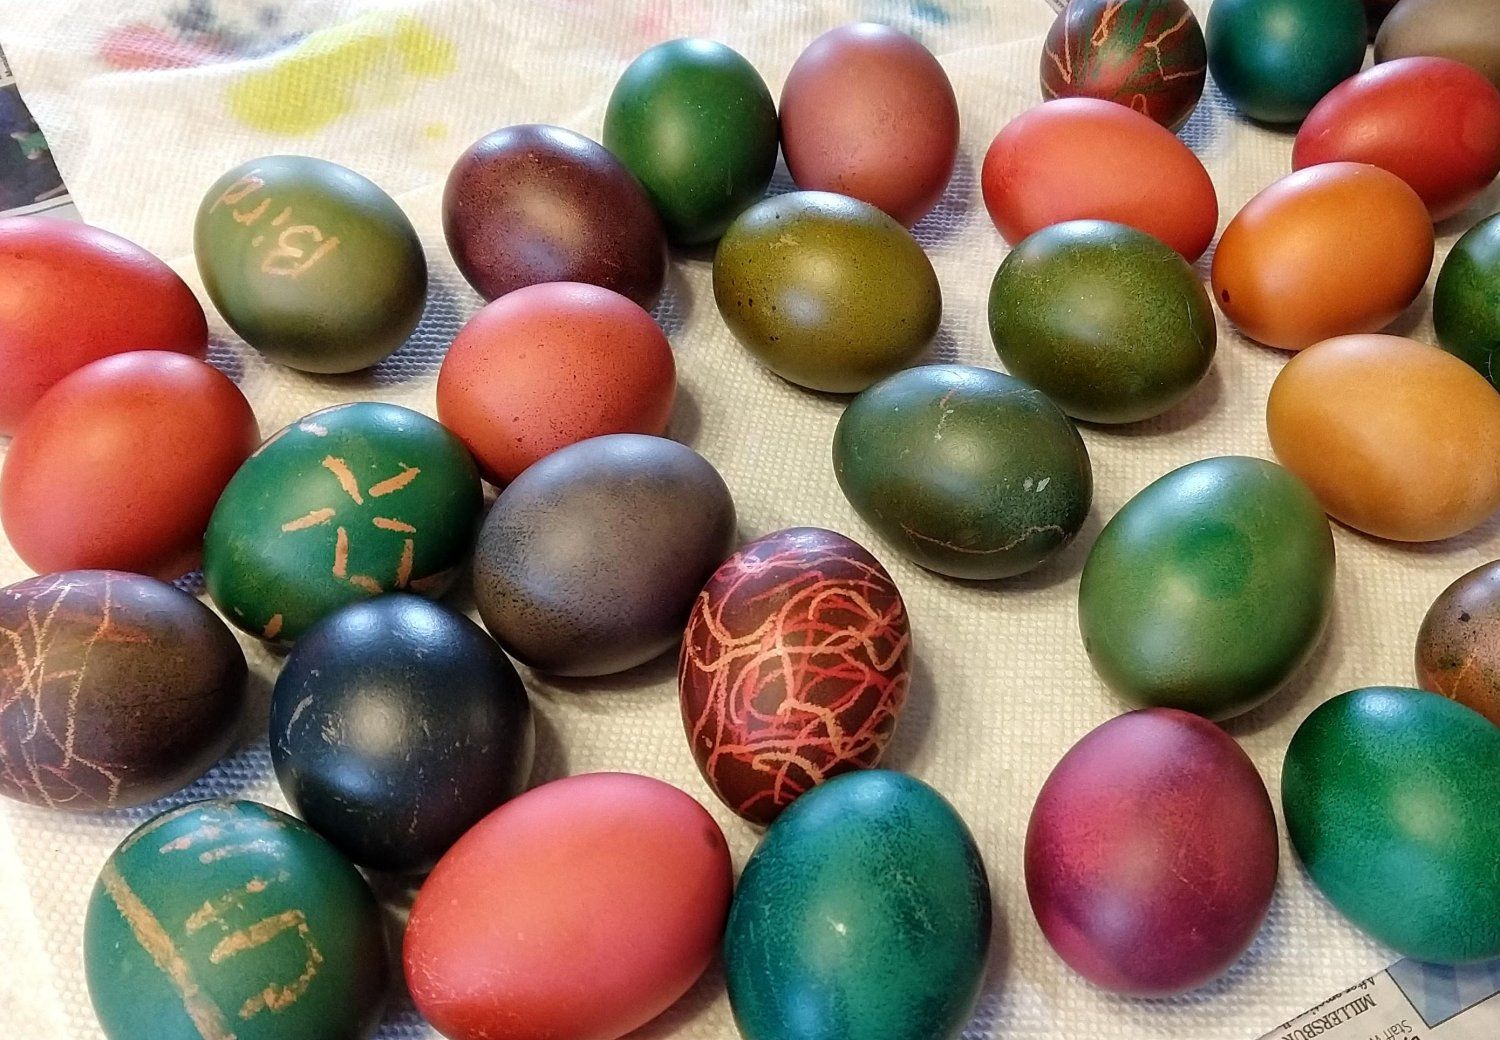 Next Happening: Happy Easter!